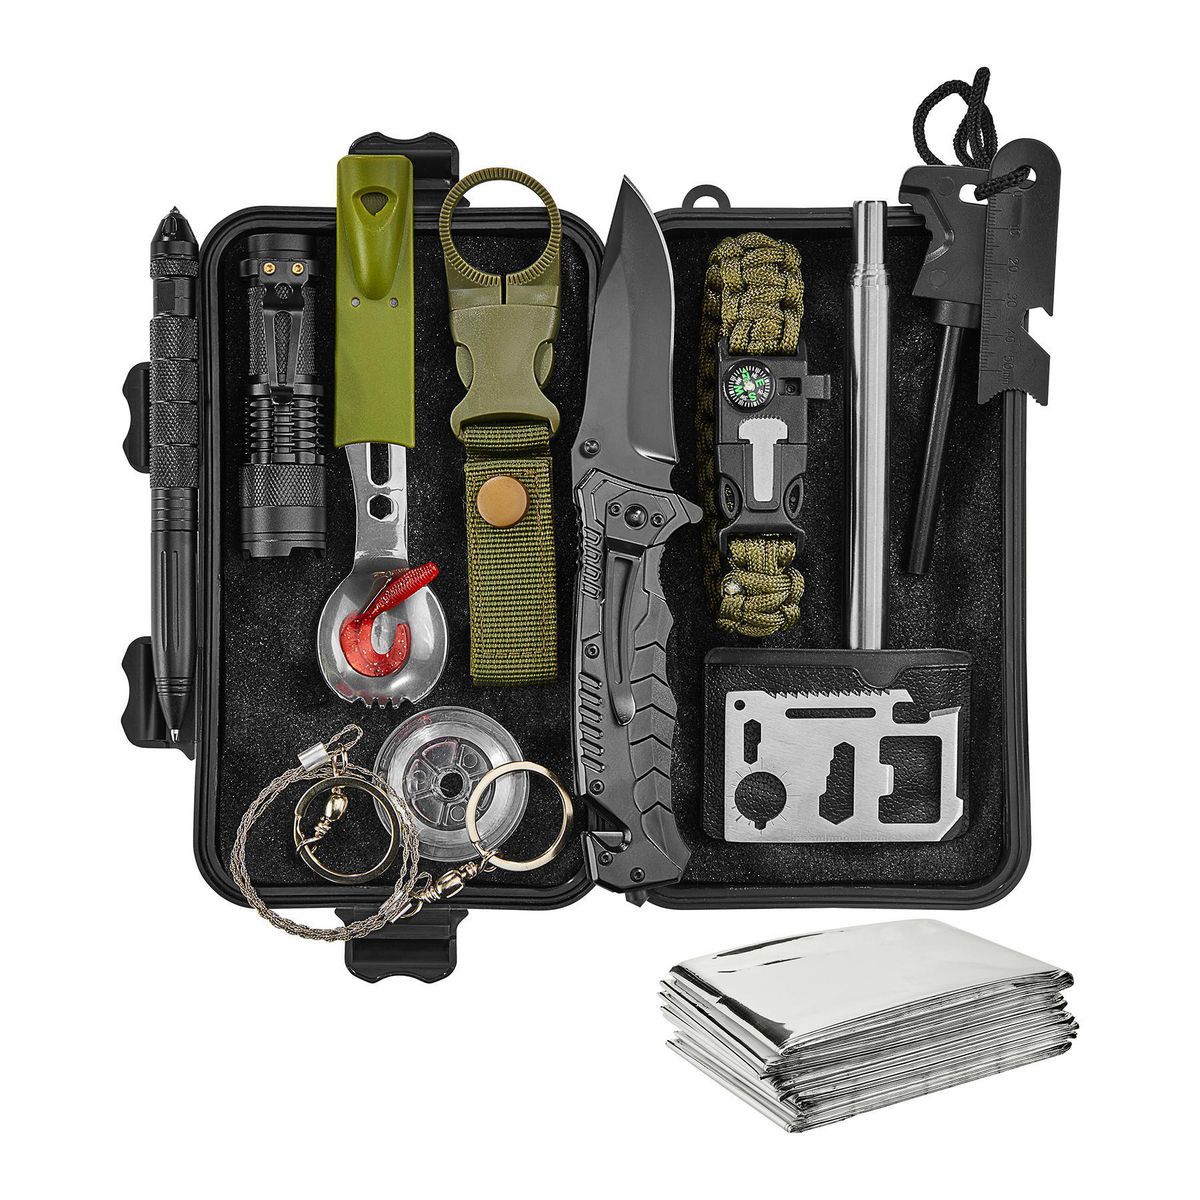 Nice comprehensive survival emergency pack great for car or backpacks  $25 @ HF